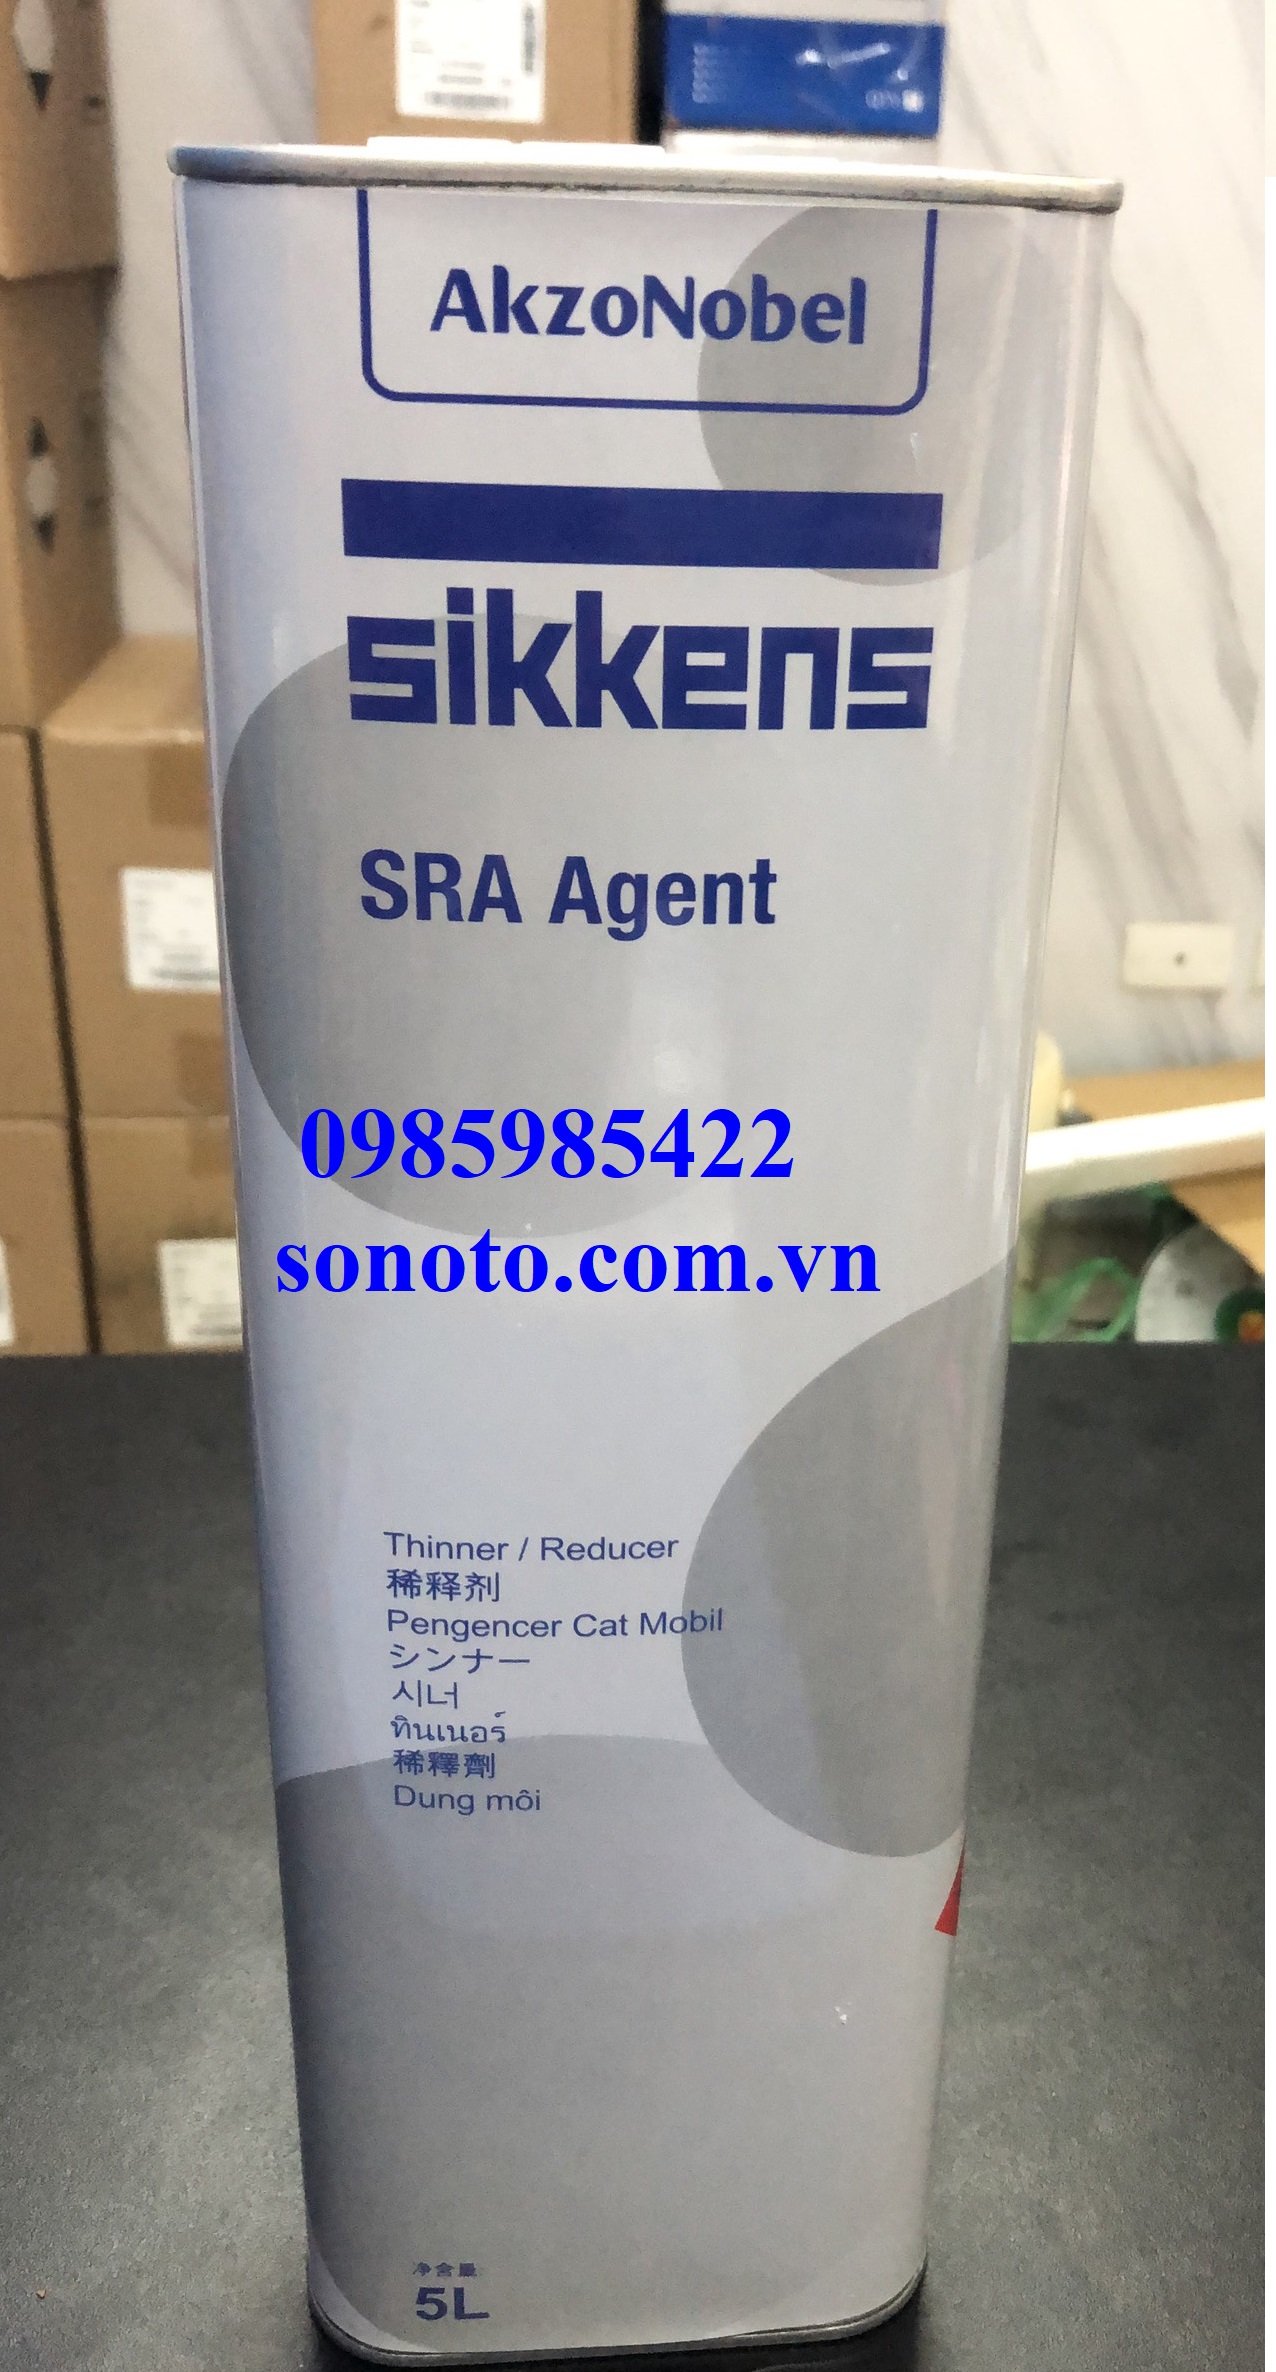 dung-moi-pha-mi-sikkens-thinner-sra-agent-xang-pha-mi-5-lit